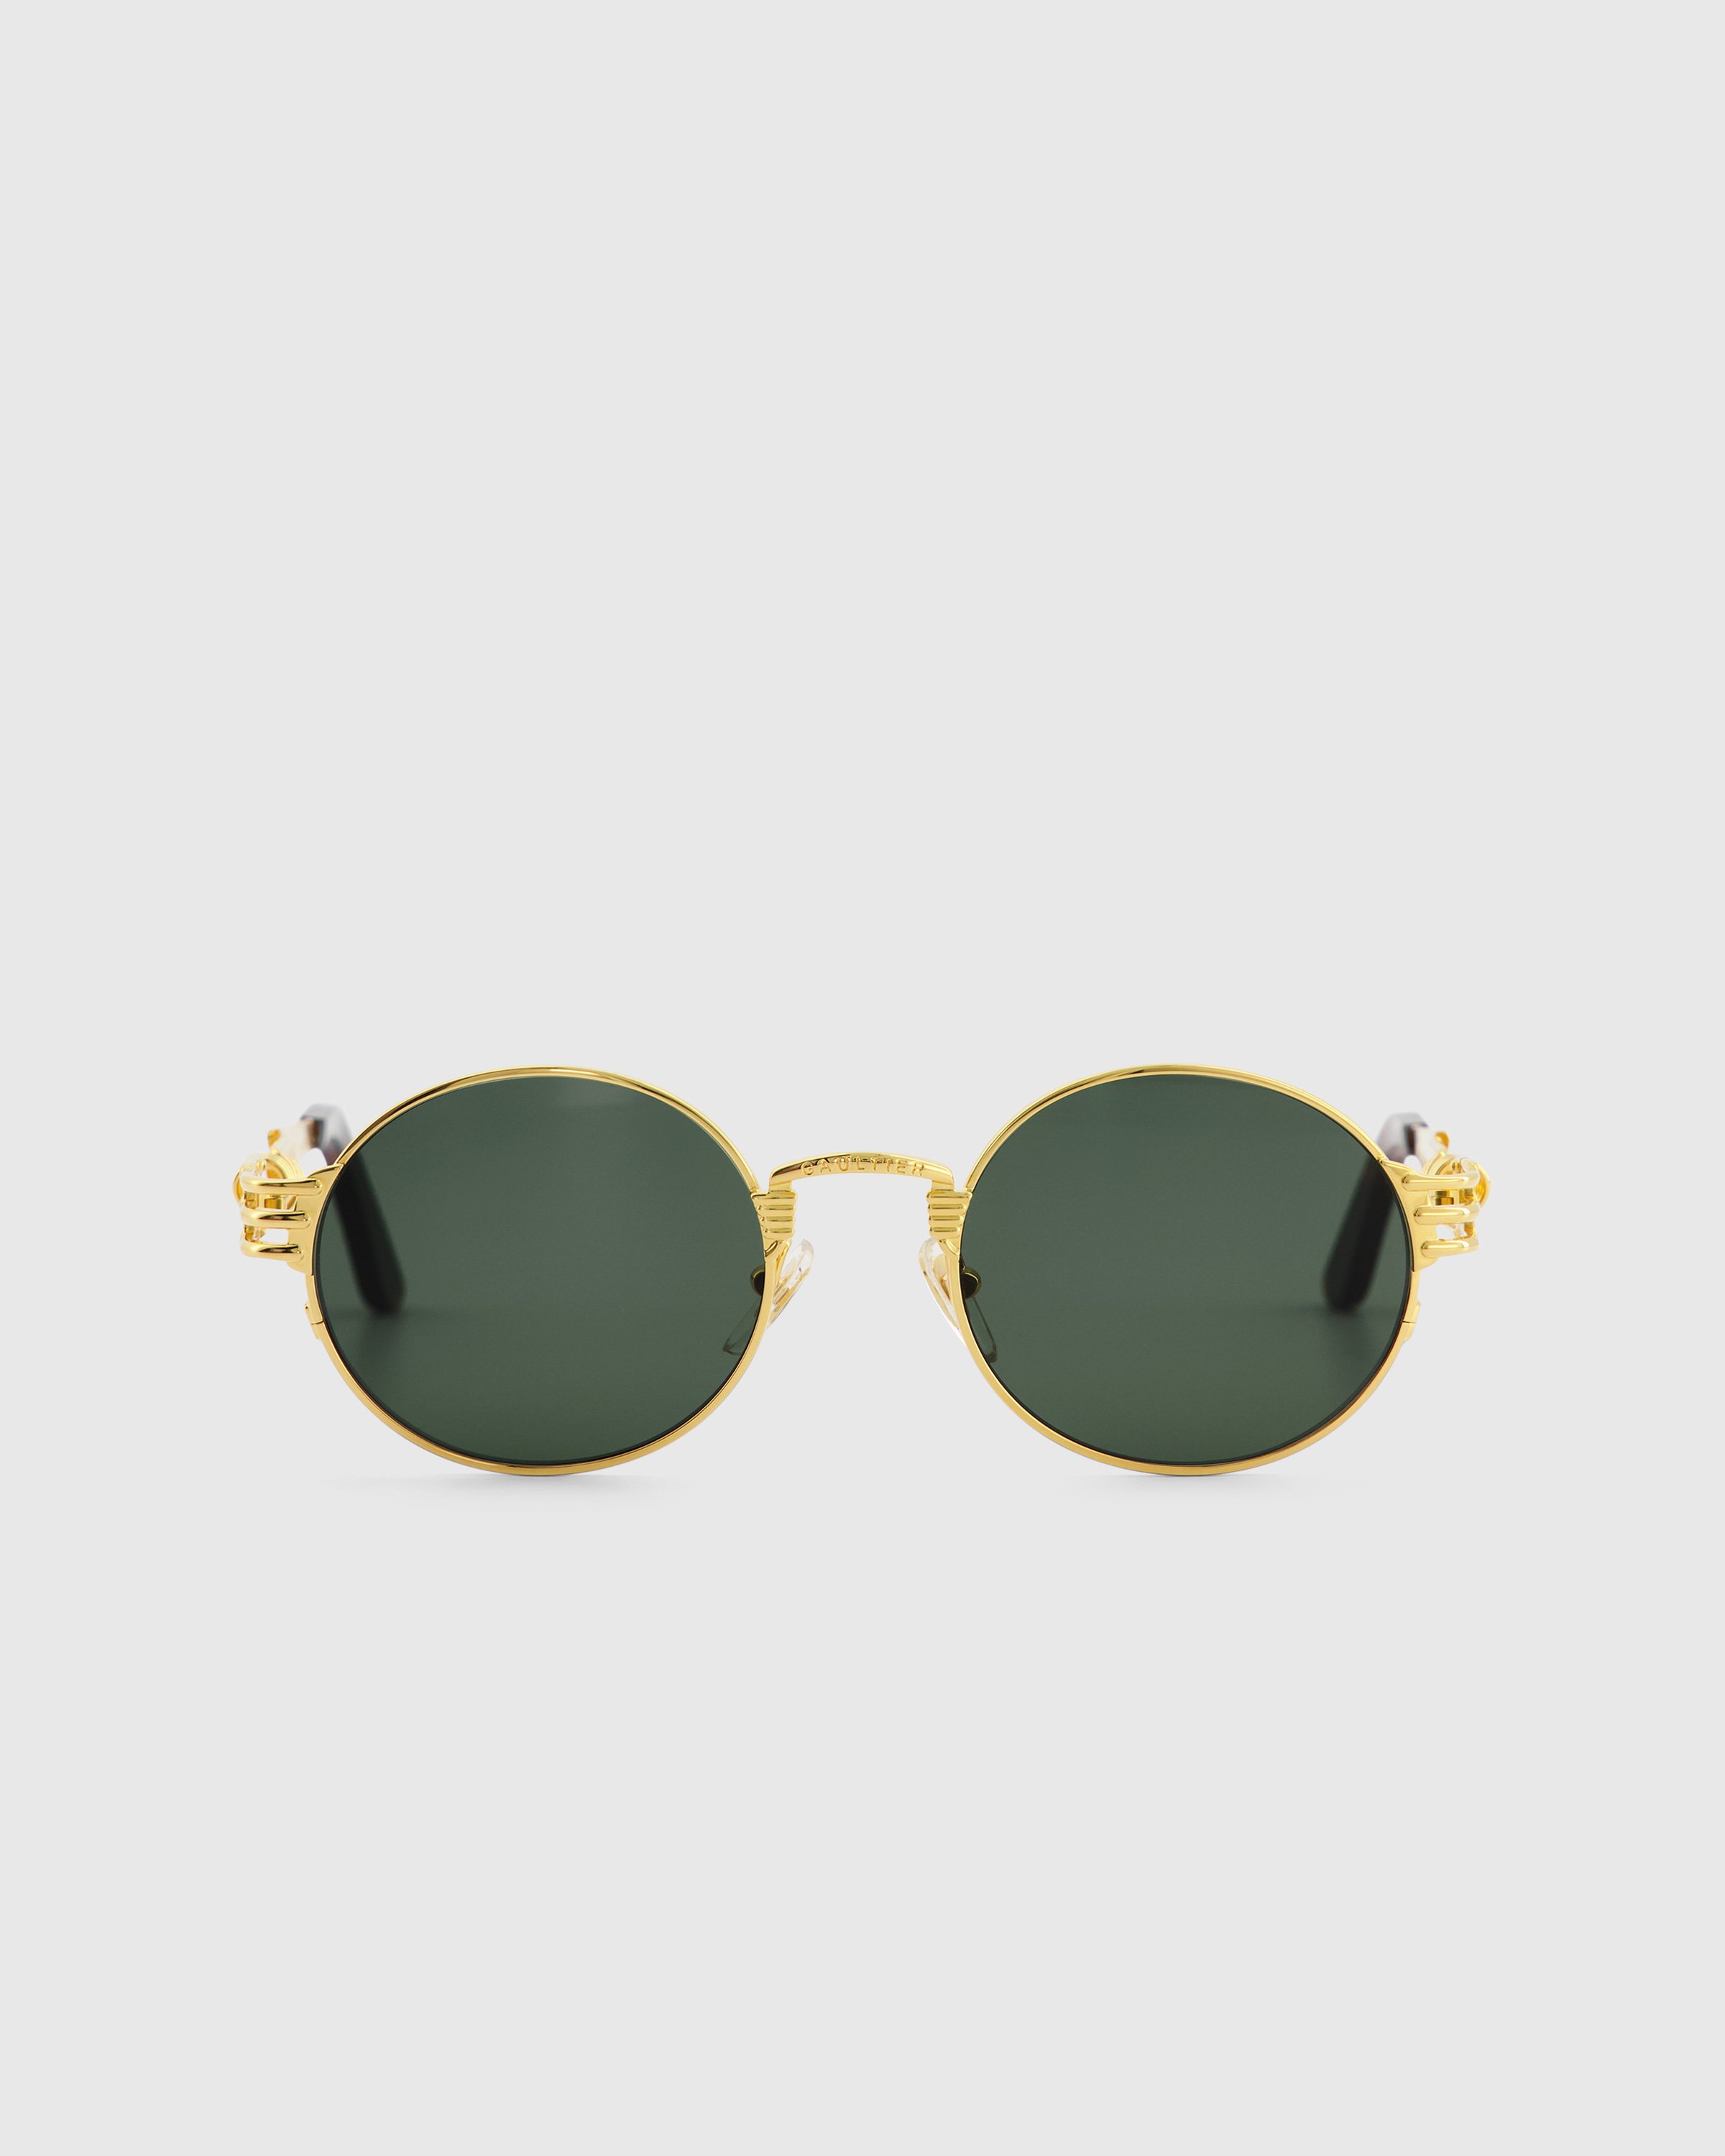 Jean Paul Gaultier x Burna Boy – 56-6106 Double Resort Sunglasses